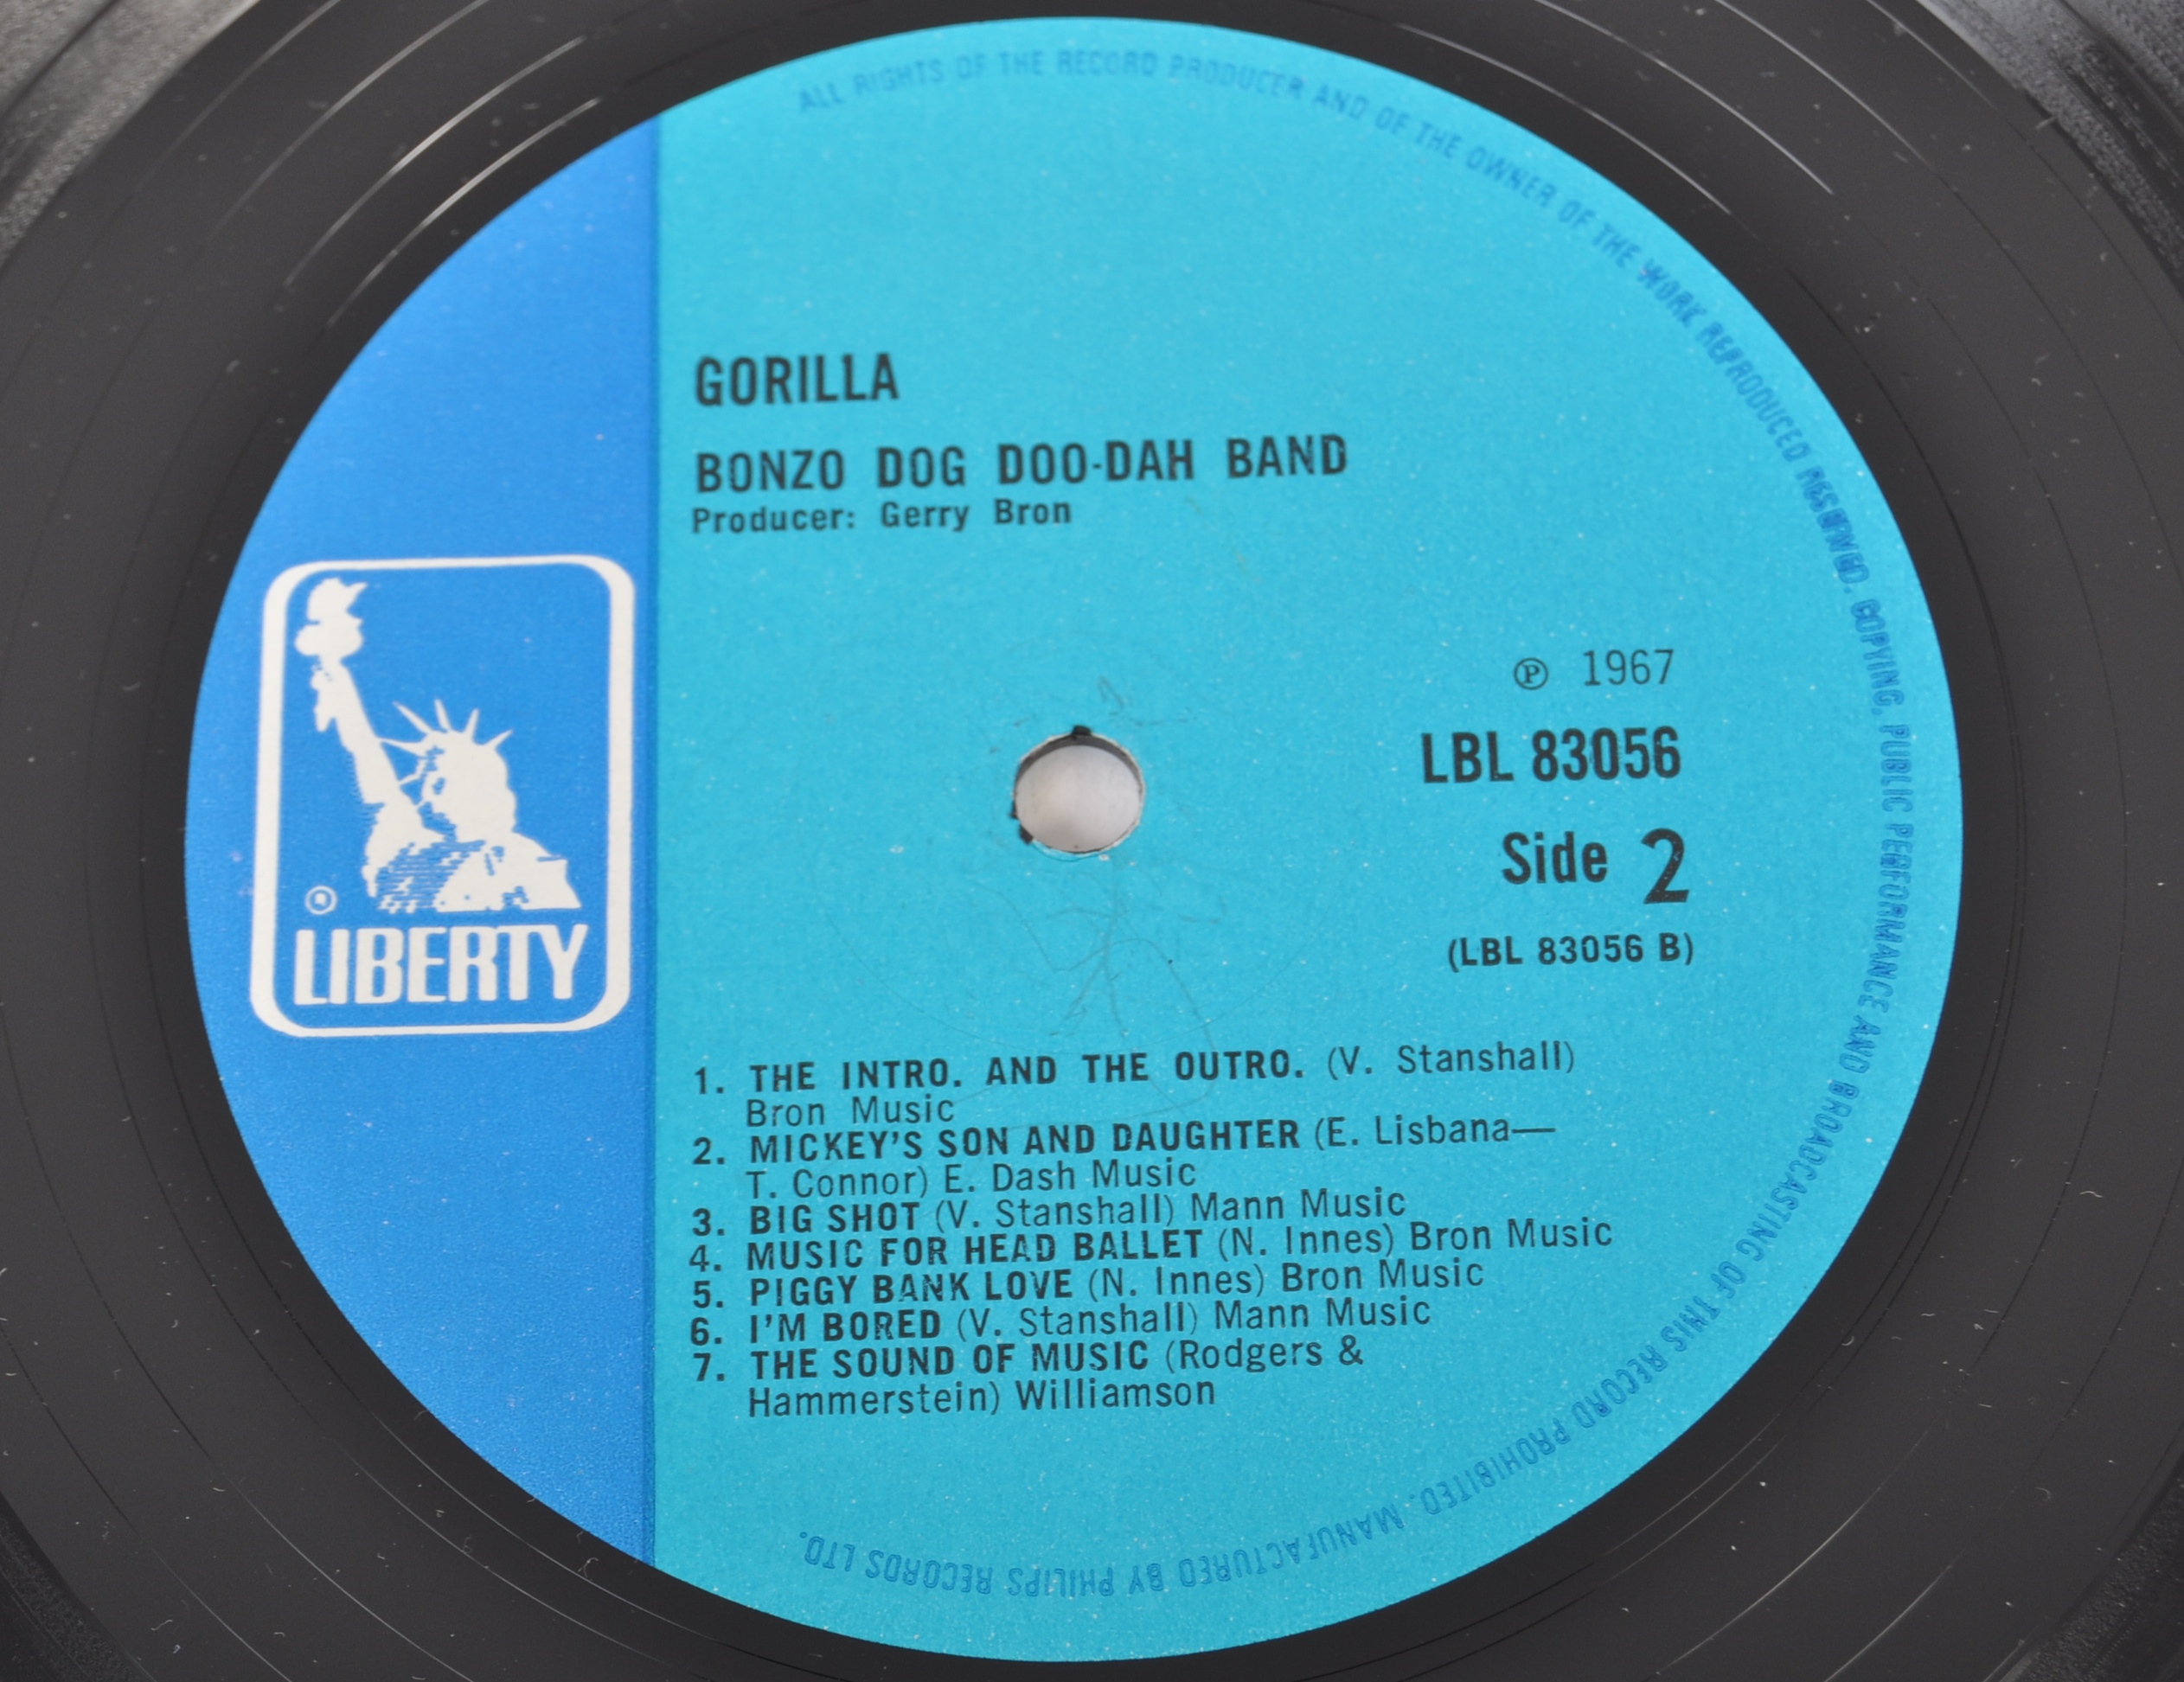 BONZO DOG BAND - GORILLA - 1967 MONO LIBERTY RELEASE - Image 4 of 4